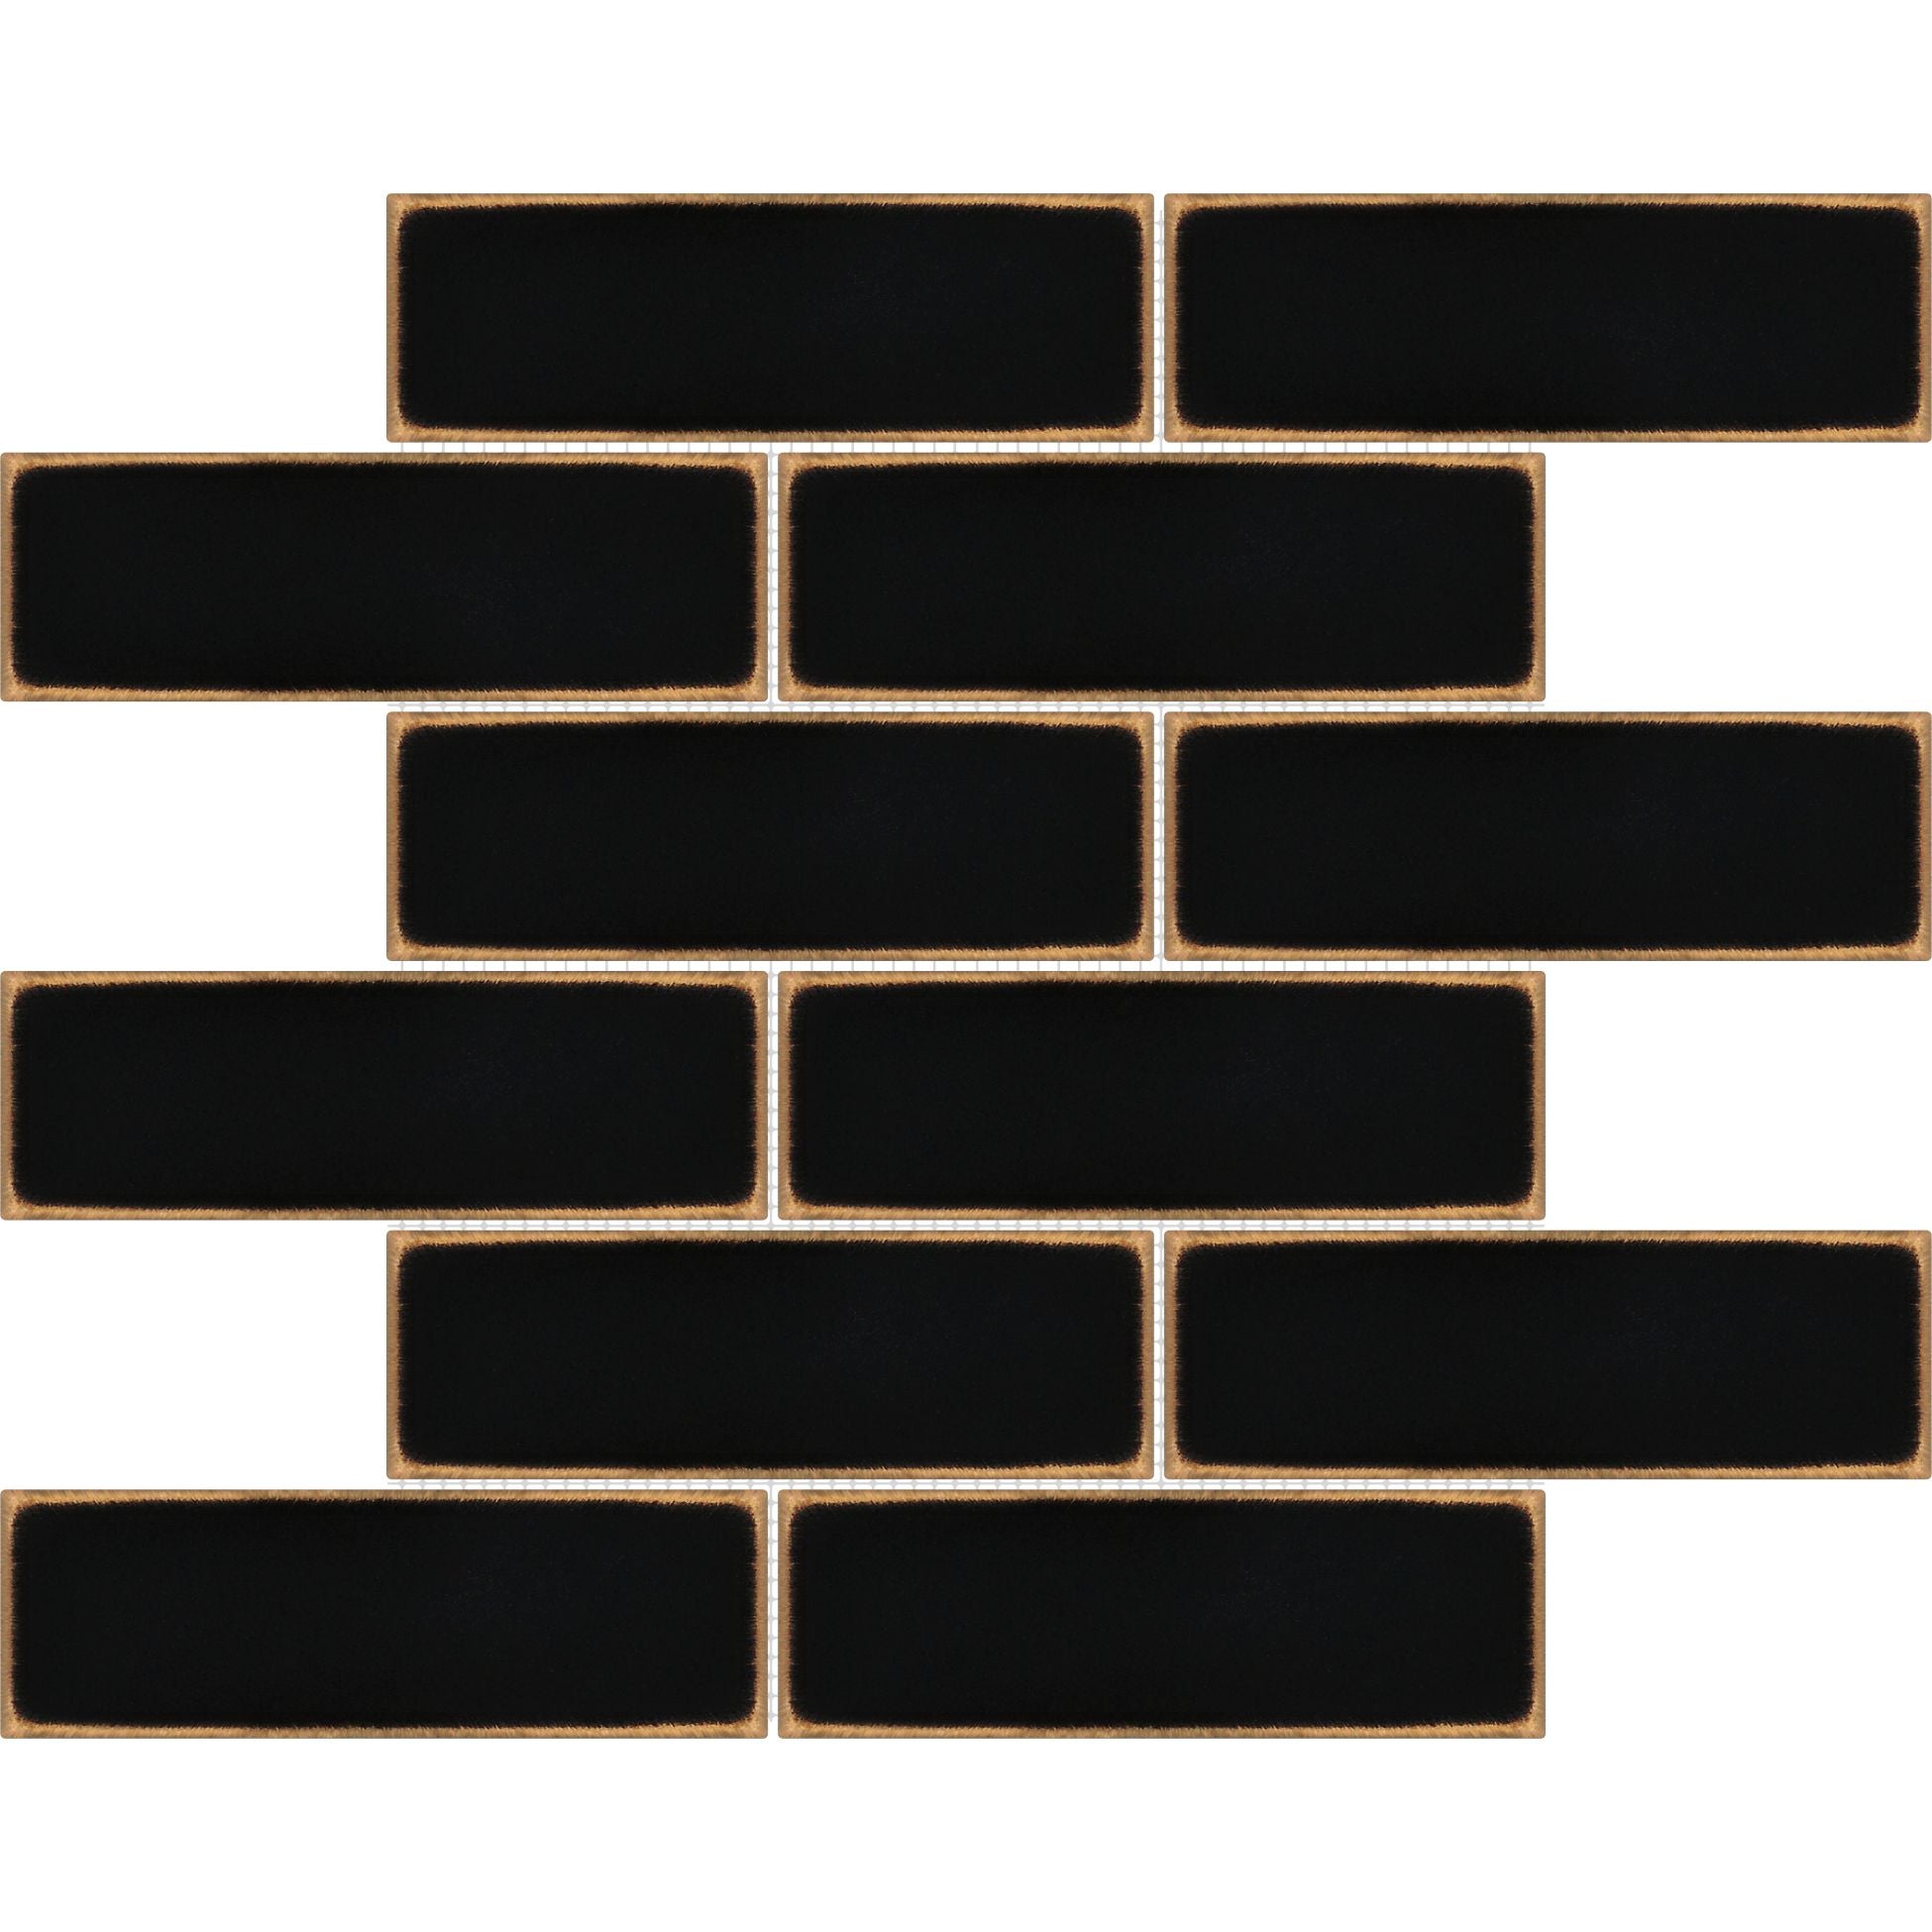 2x6 Ancient Brick Metal Black Bronze Mosaic Wall Tile for Kitchen Backsplash, Accent Wall, Bathroom Wall, Fireplace Surround